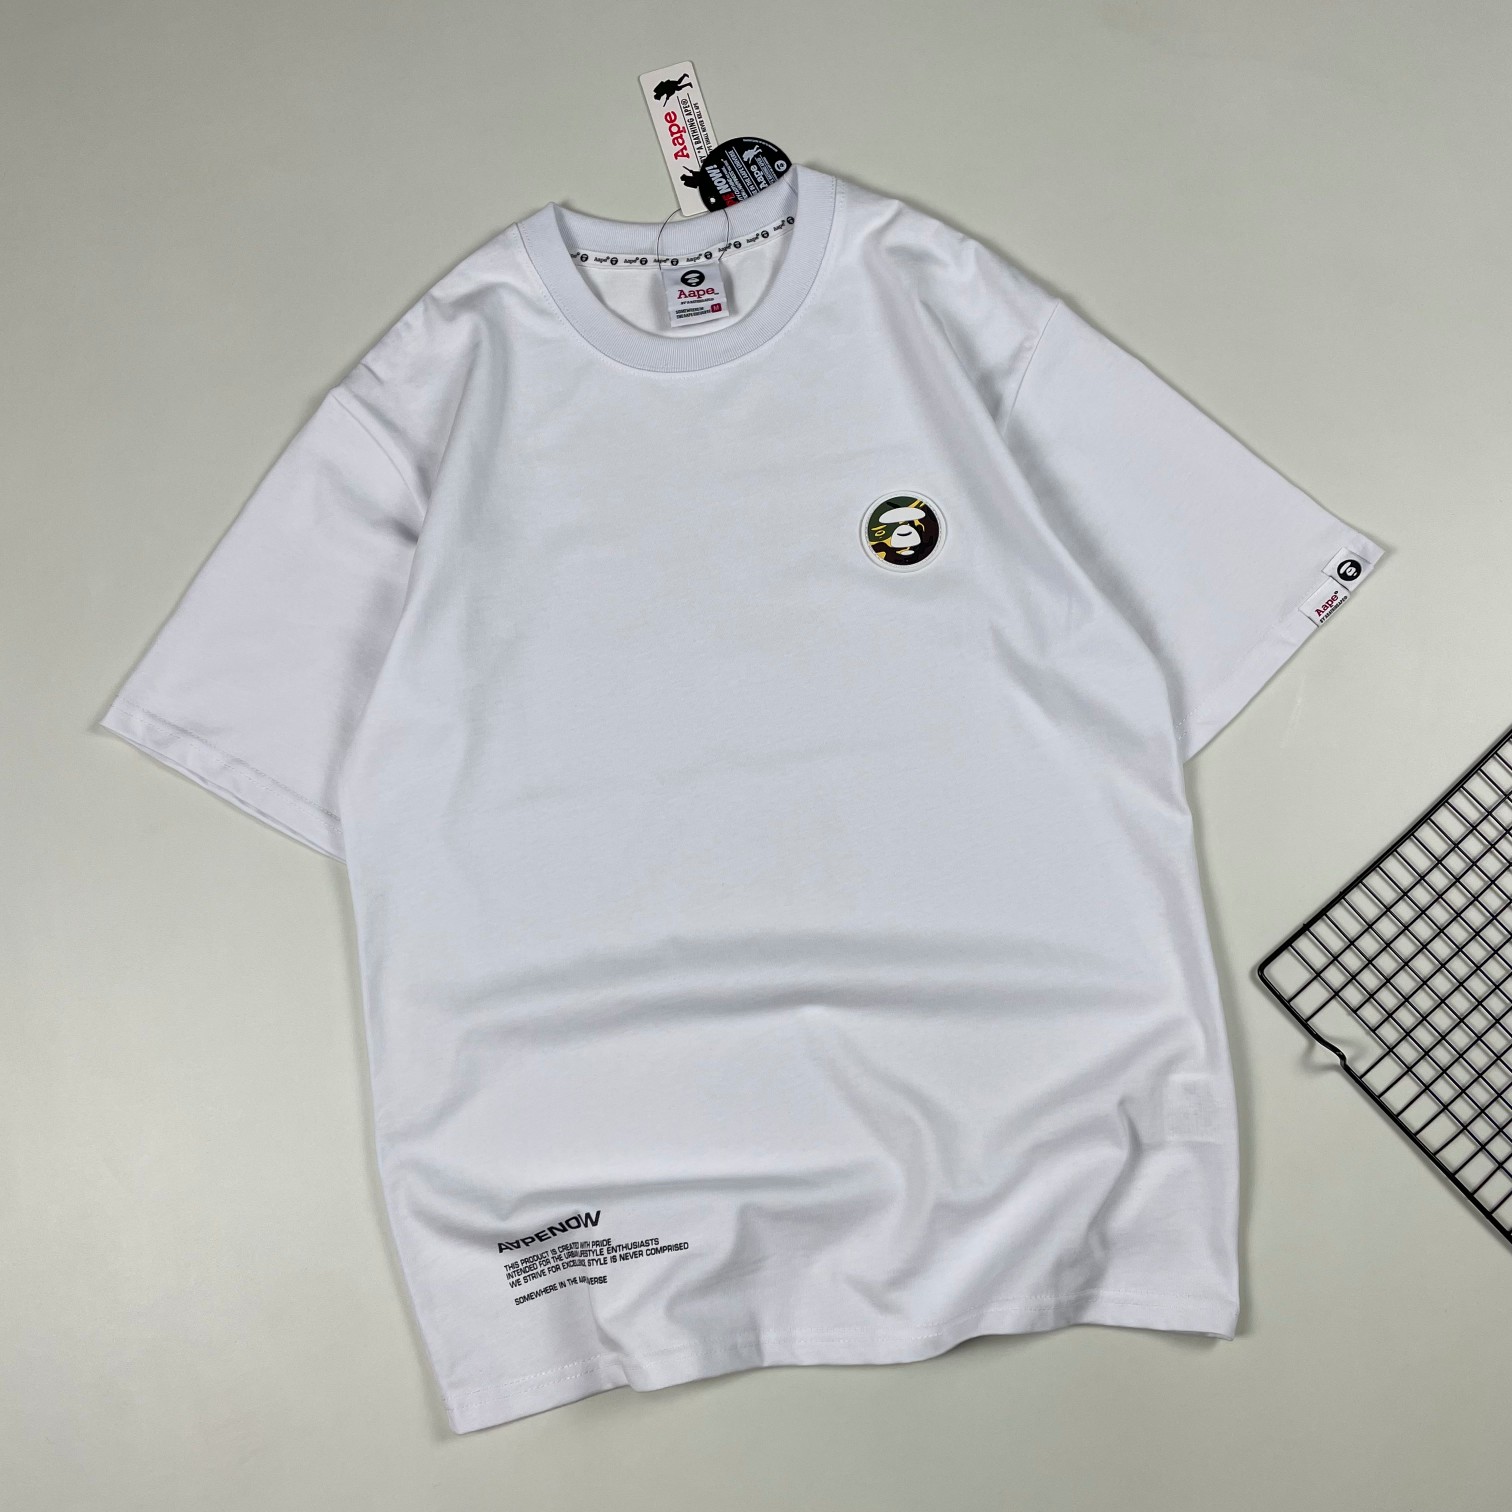 Aape Clothing T-Shirt Black Pink White Yellow Printing Unisex Cotton Short Sleeve